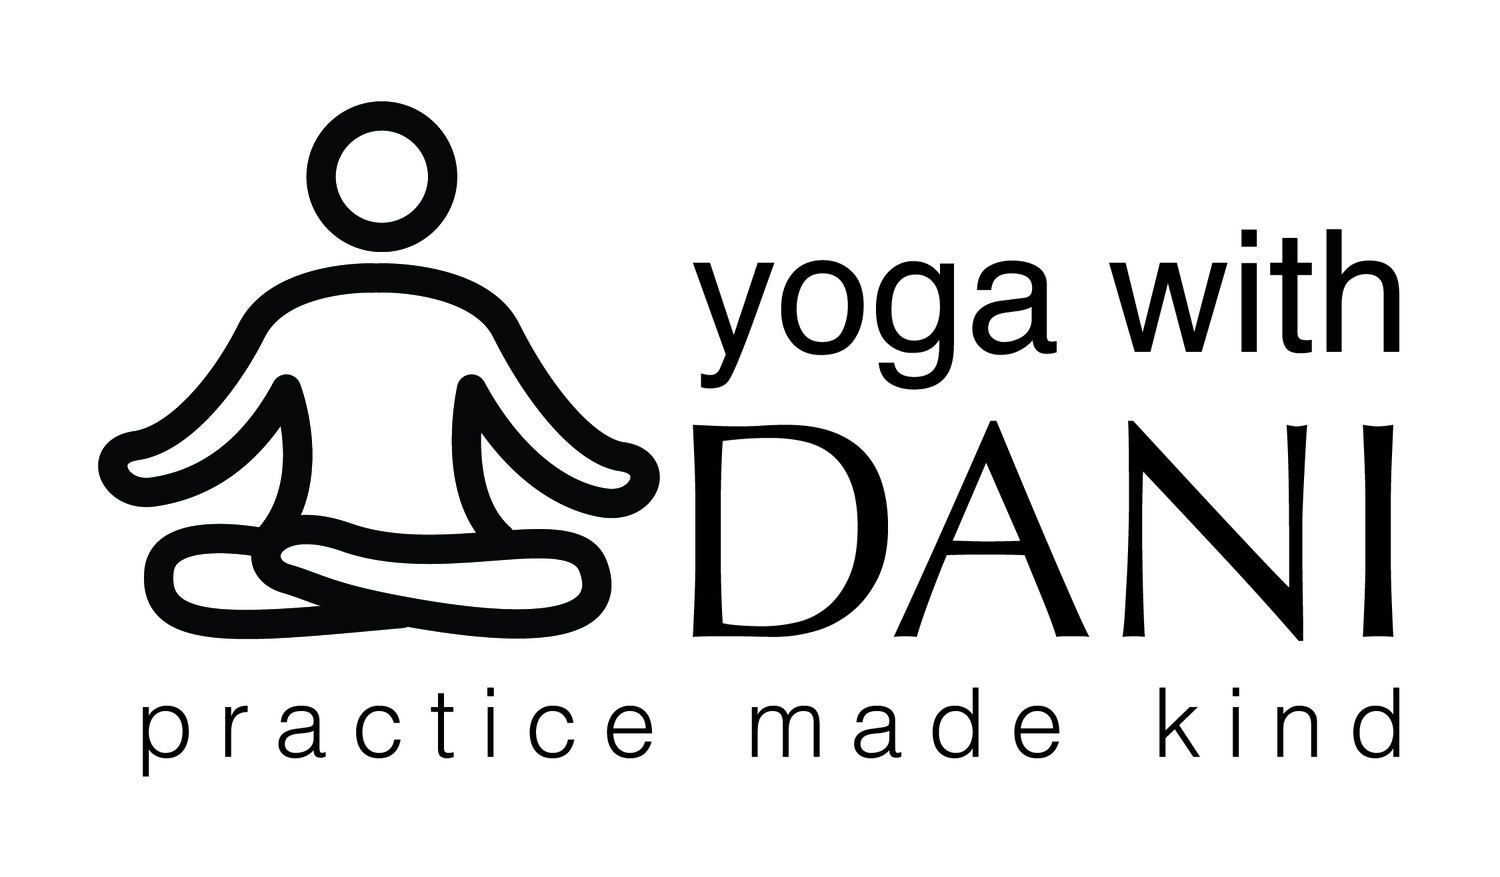 Yoga with Dani